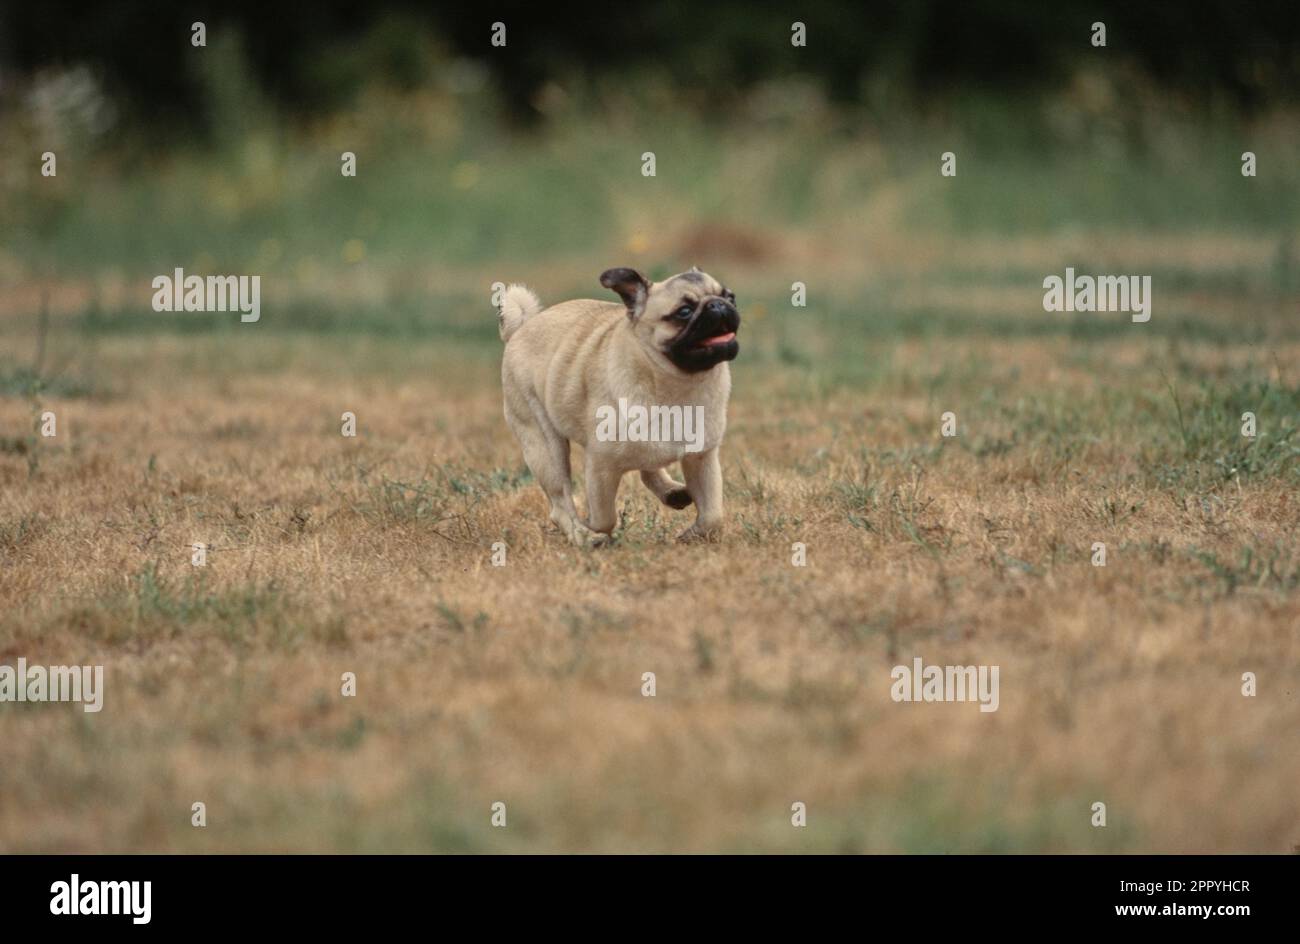 Pug racing through grassy field Stock Photo